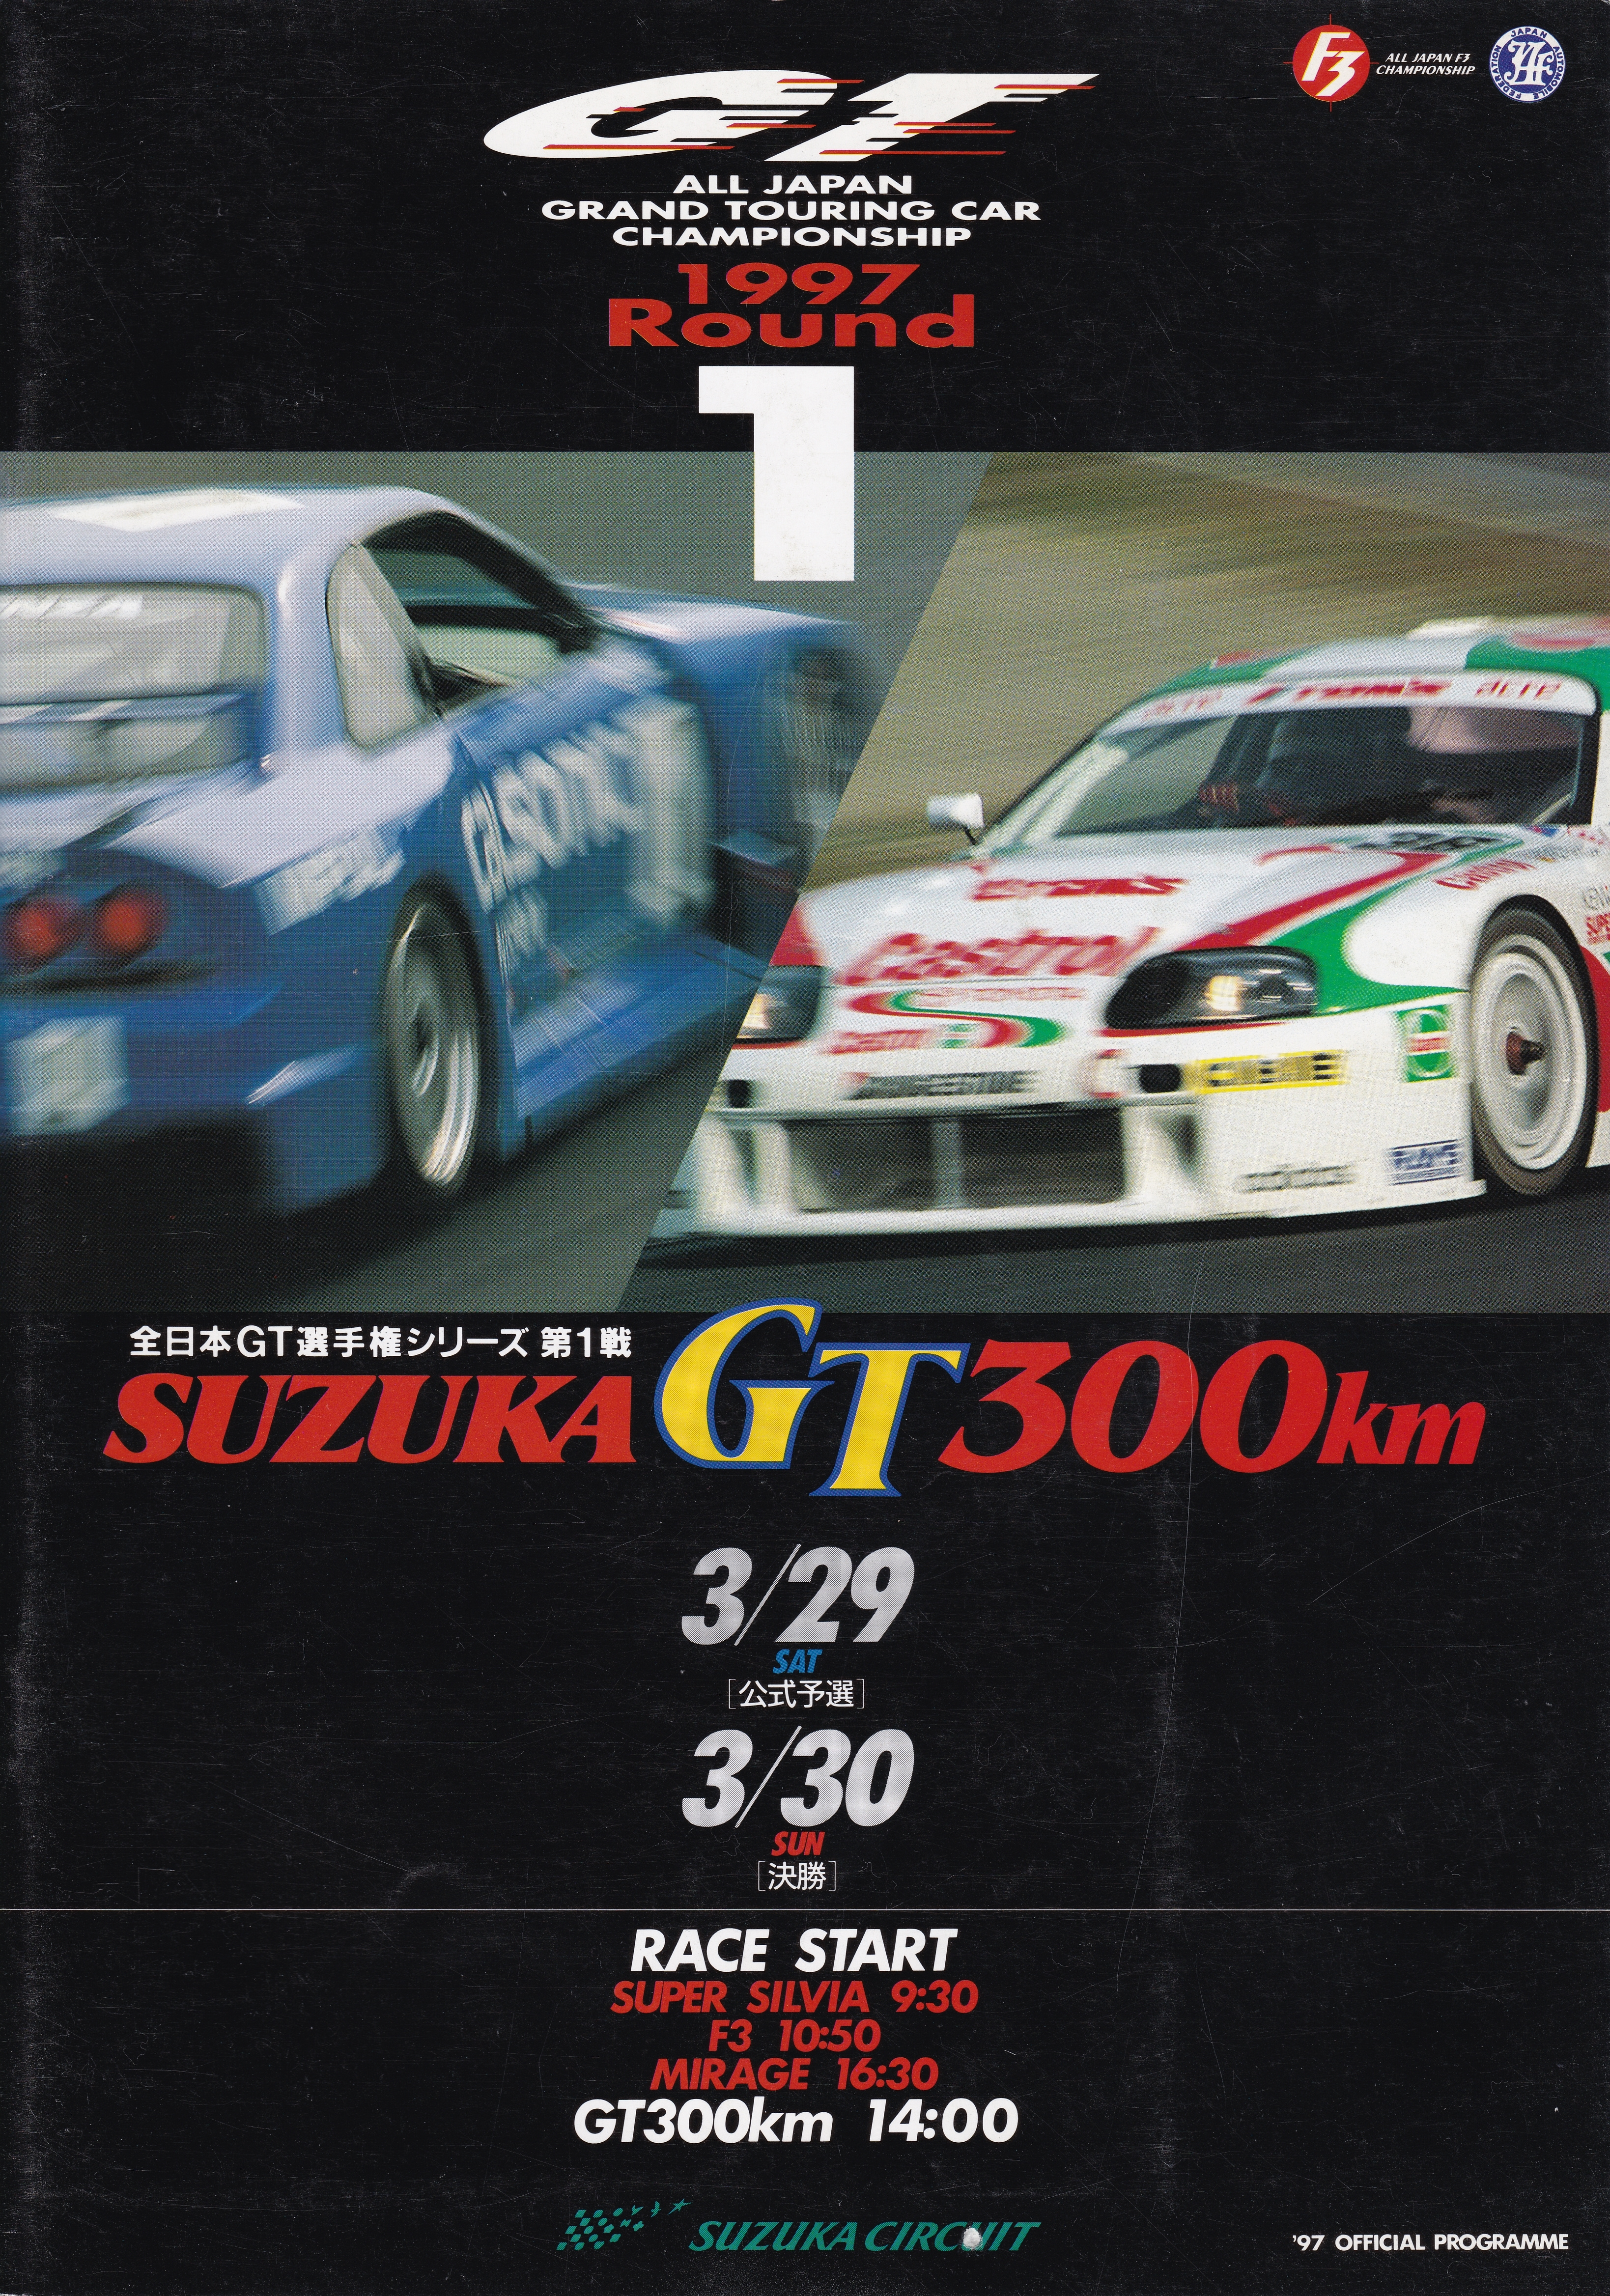 1997 All Japan Grand Touring Car Championship Programmes